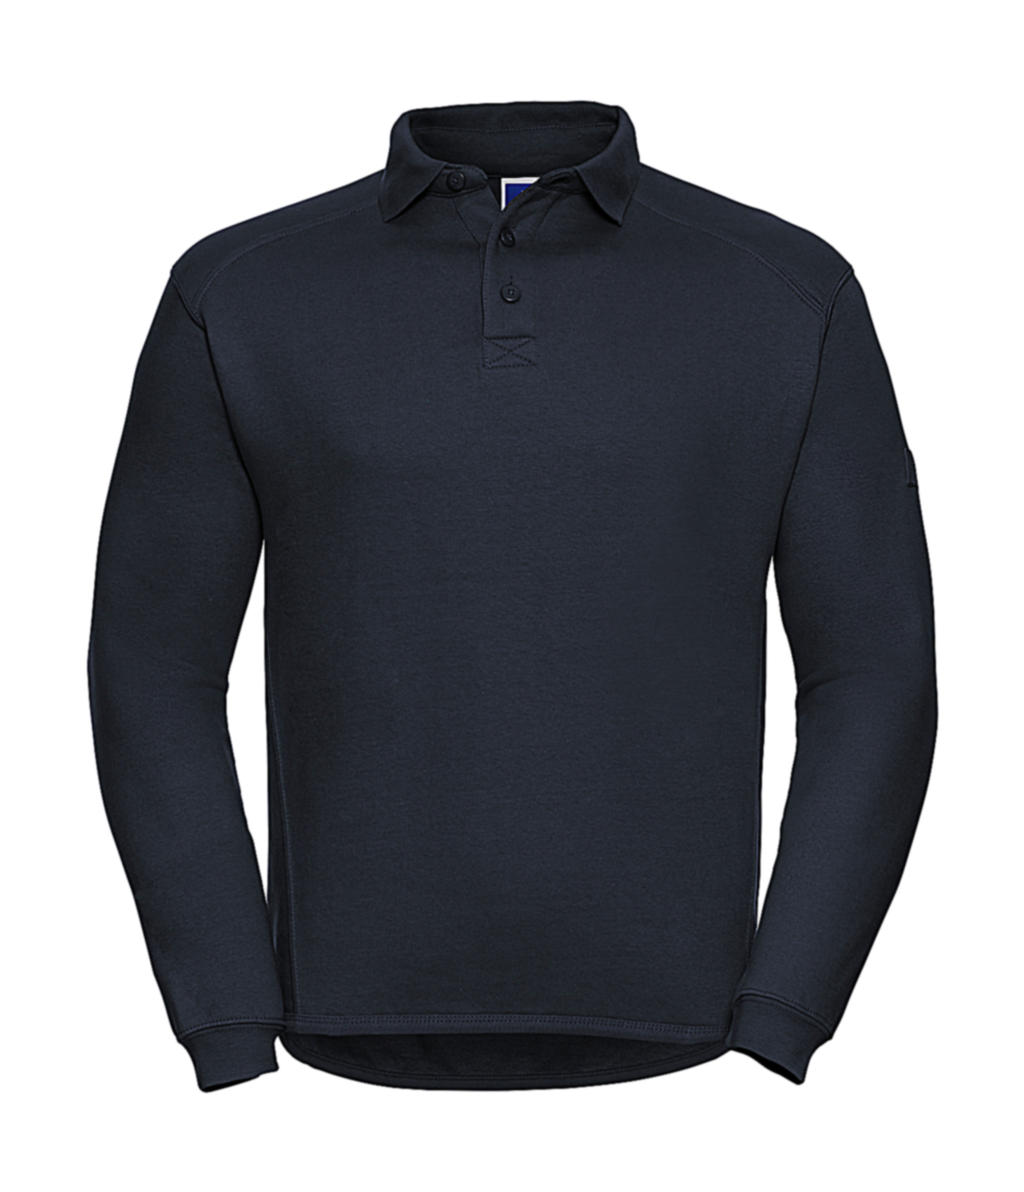  Heavy Duty Collar Sweatshirt in Farbe French Navy